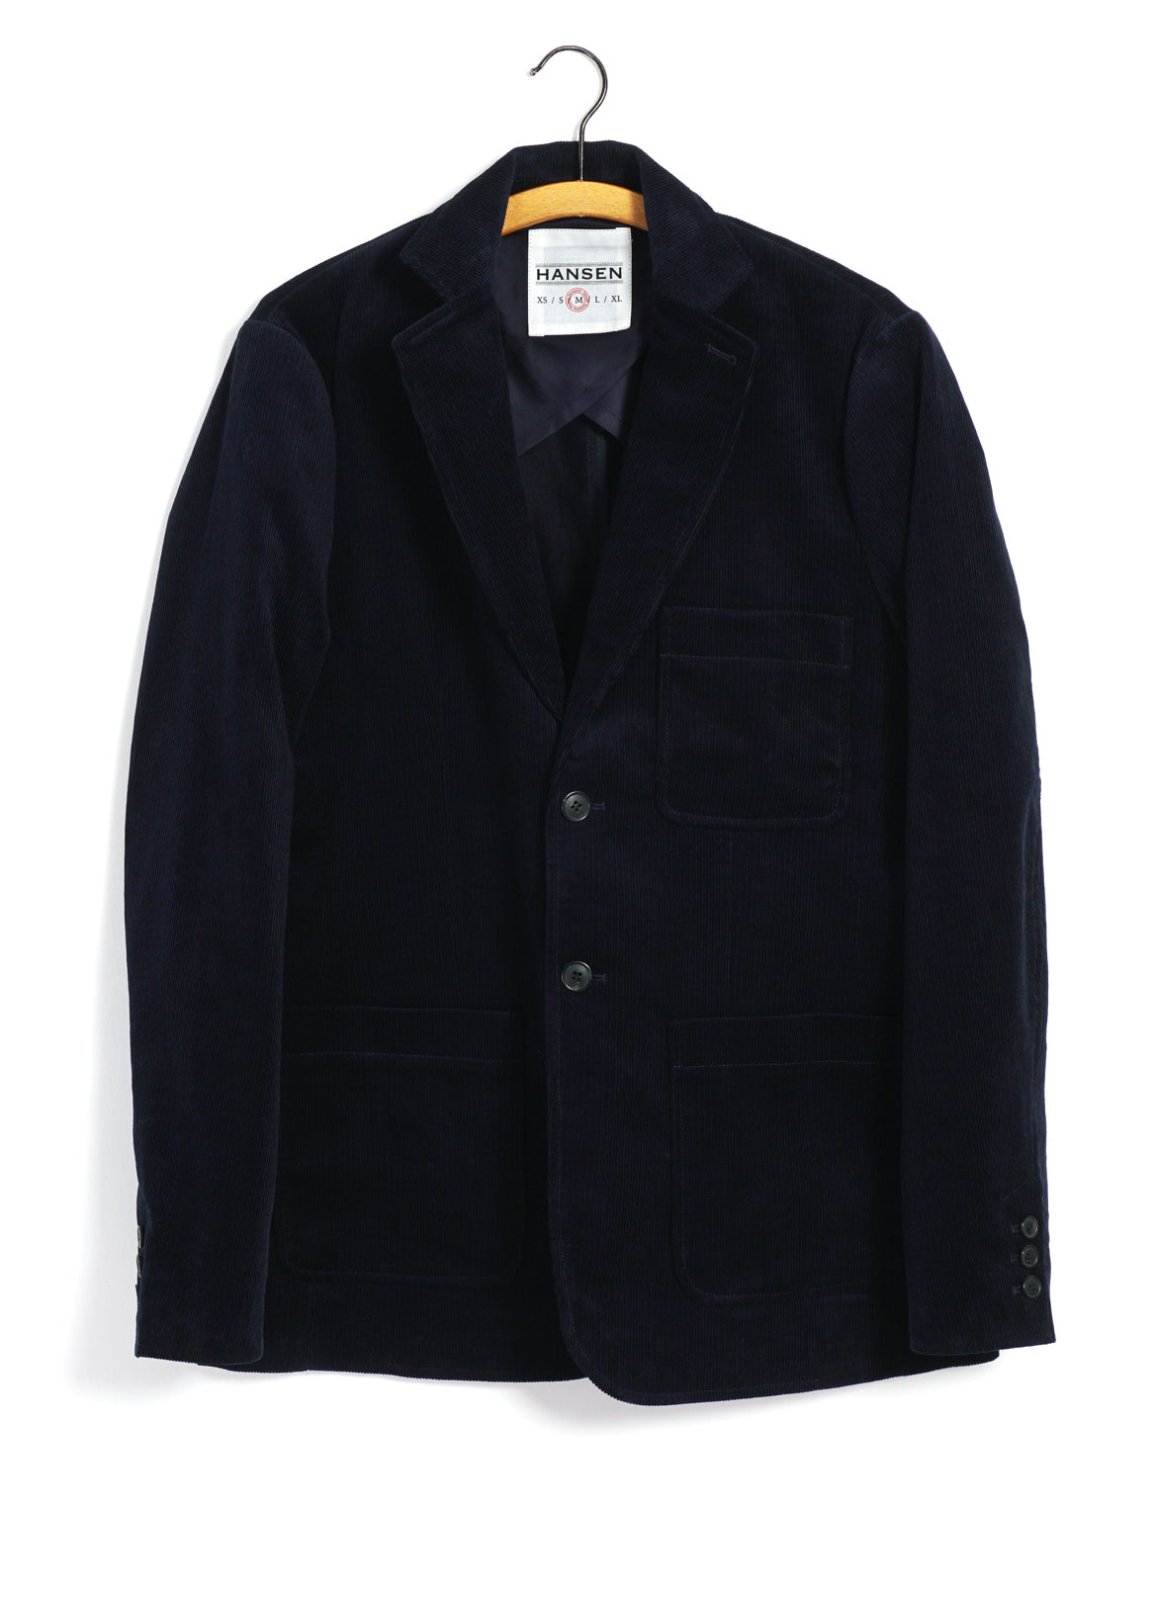 HANSEN GARMENTS - CHRIS | Classic Two Button Blazer | Fluid Navy - HANSEN Garments